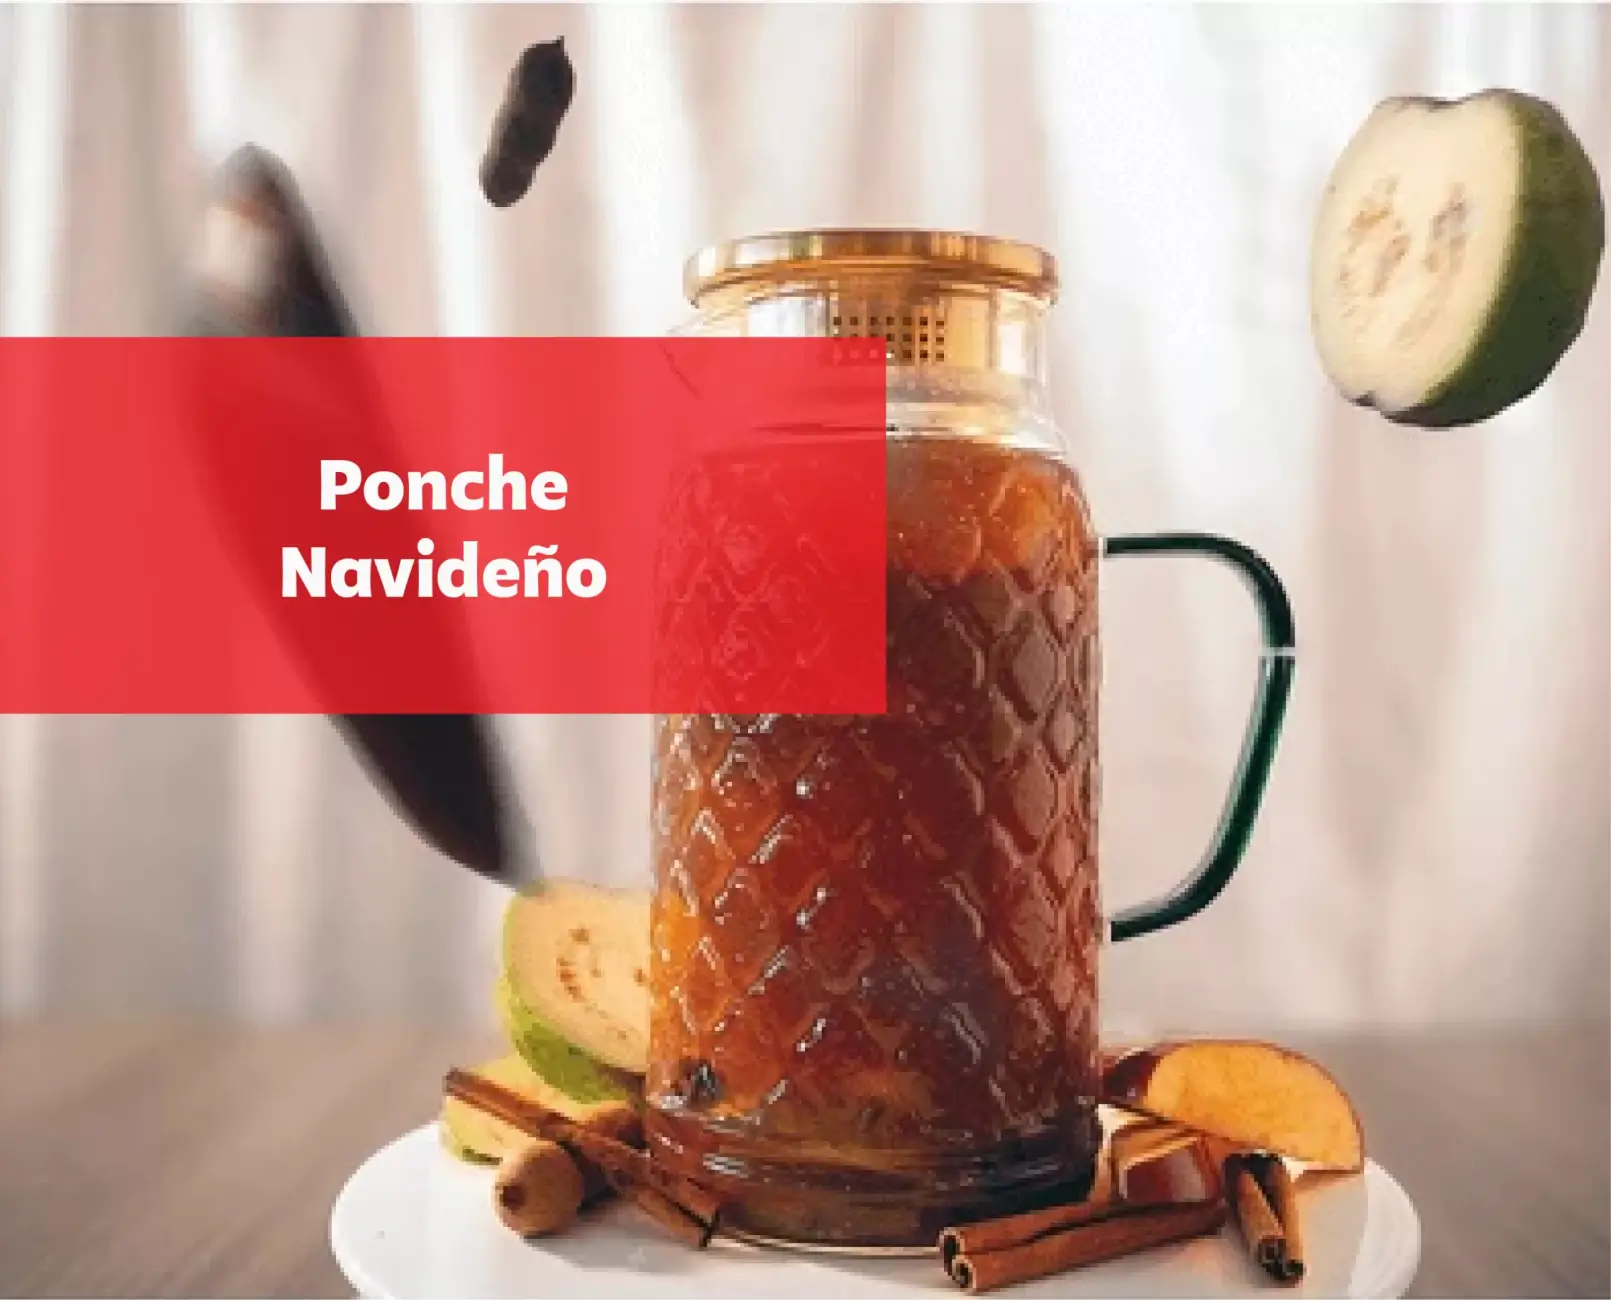 Ponche Navideno from Sedanos.com